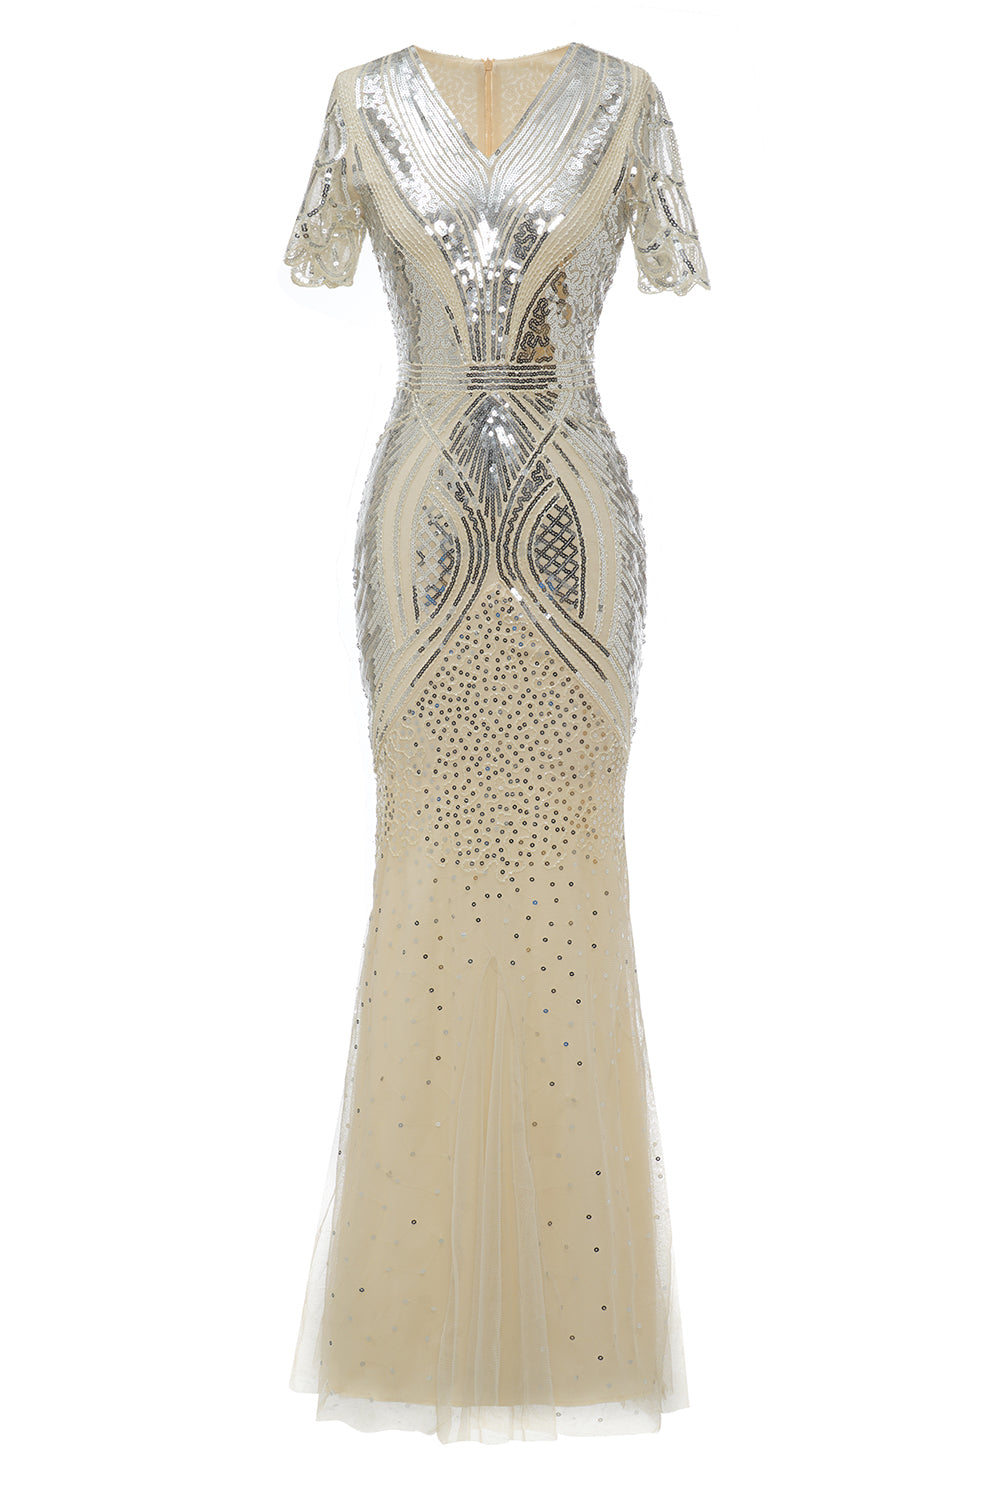 ZAPAKA Women 1920s Dress Royal Blue Sequin Long Great Gatsby Dress